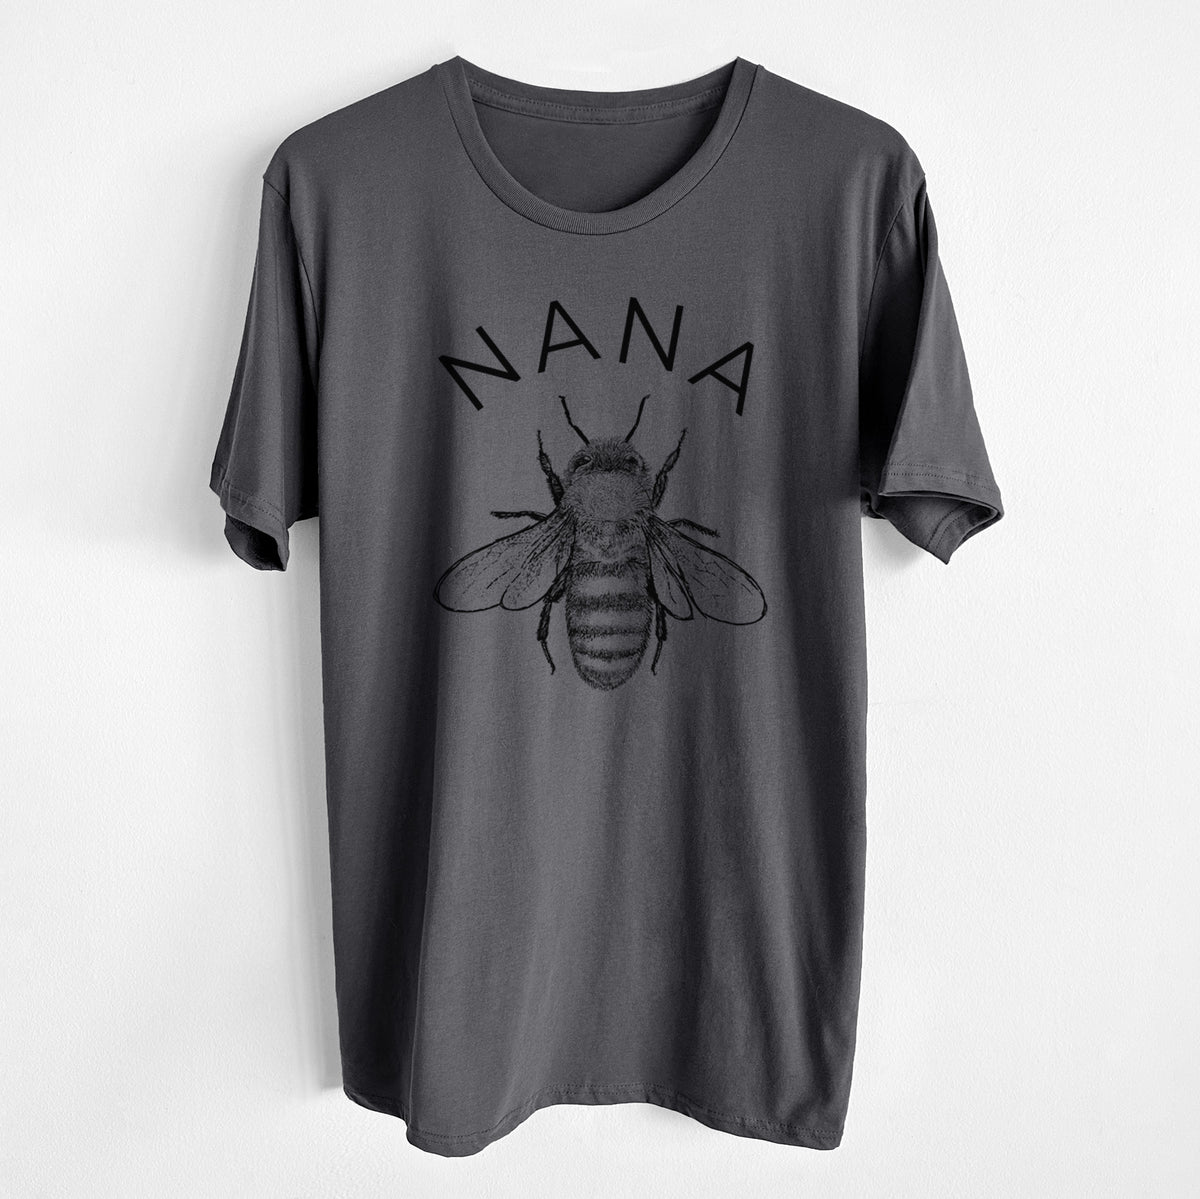 Nana Bee - Unisex Crewneck - Made in USA - 100% Organic Cotton